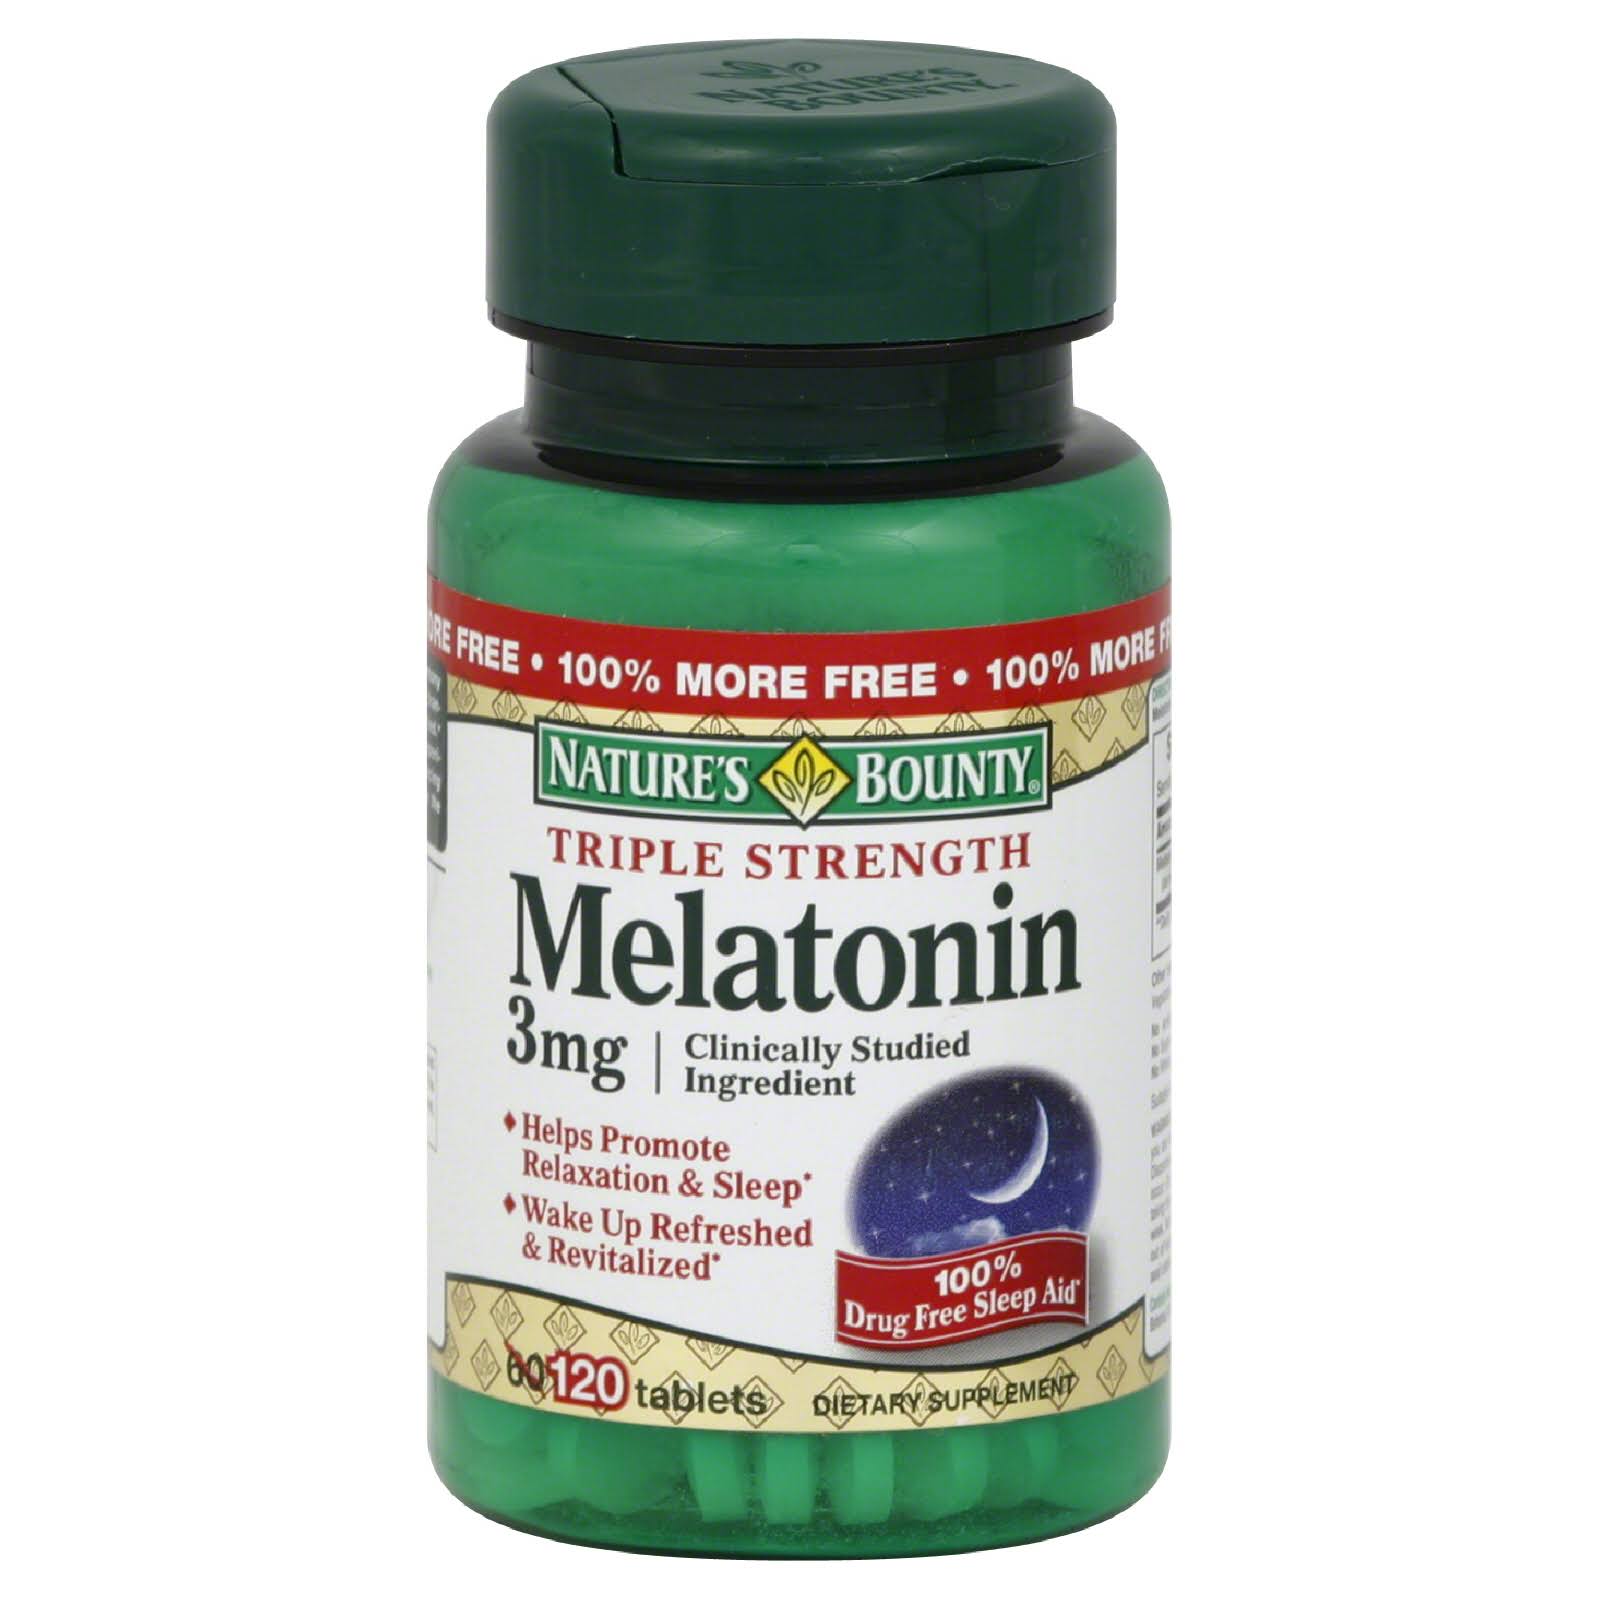 Nature's Bounty Melatonin Triple Strength 3mg Sleep Aid Dietary Supplement Tablets - 120 CT